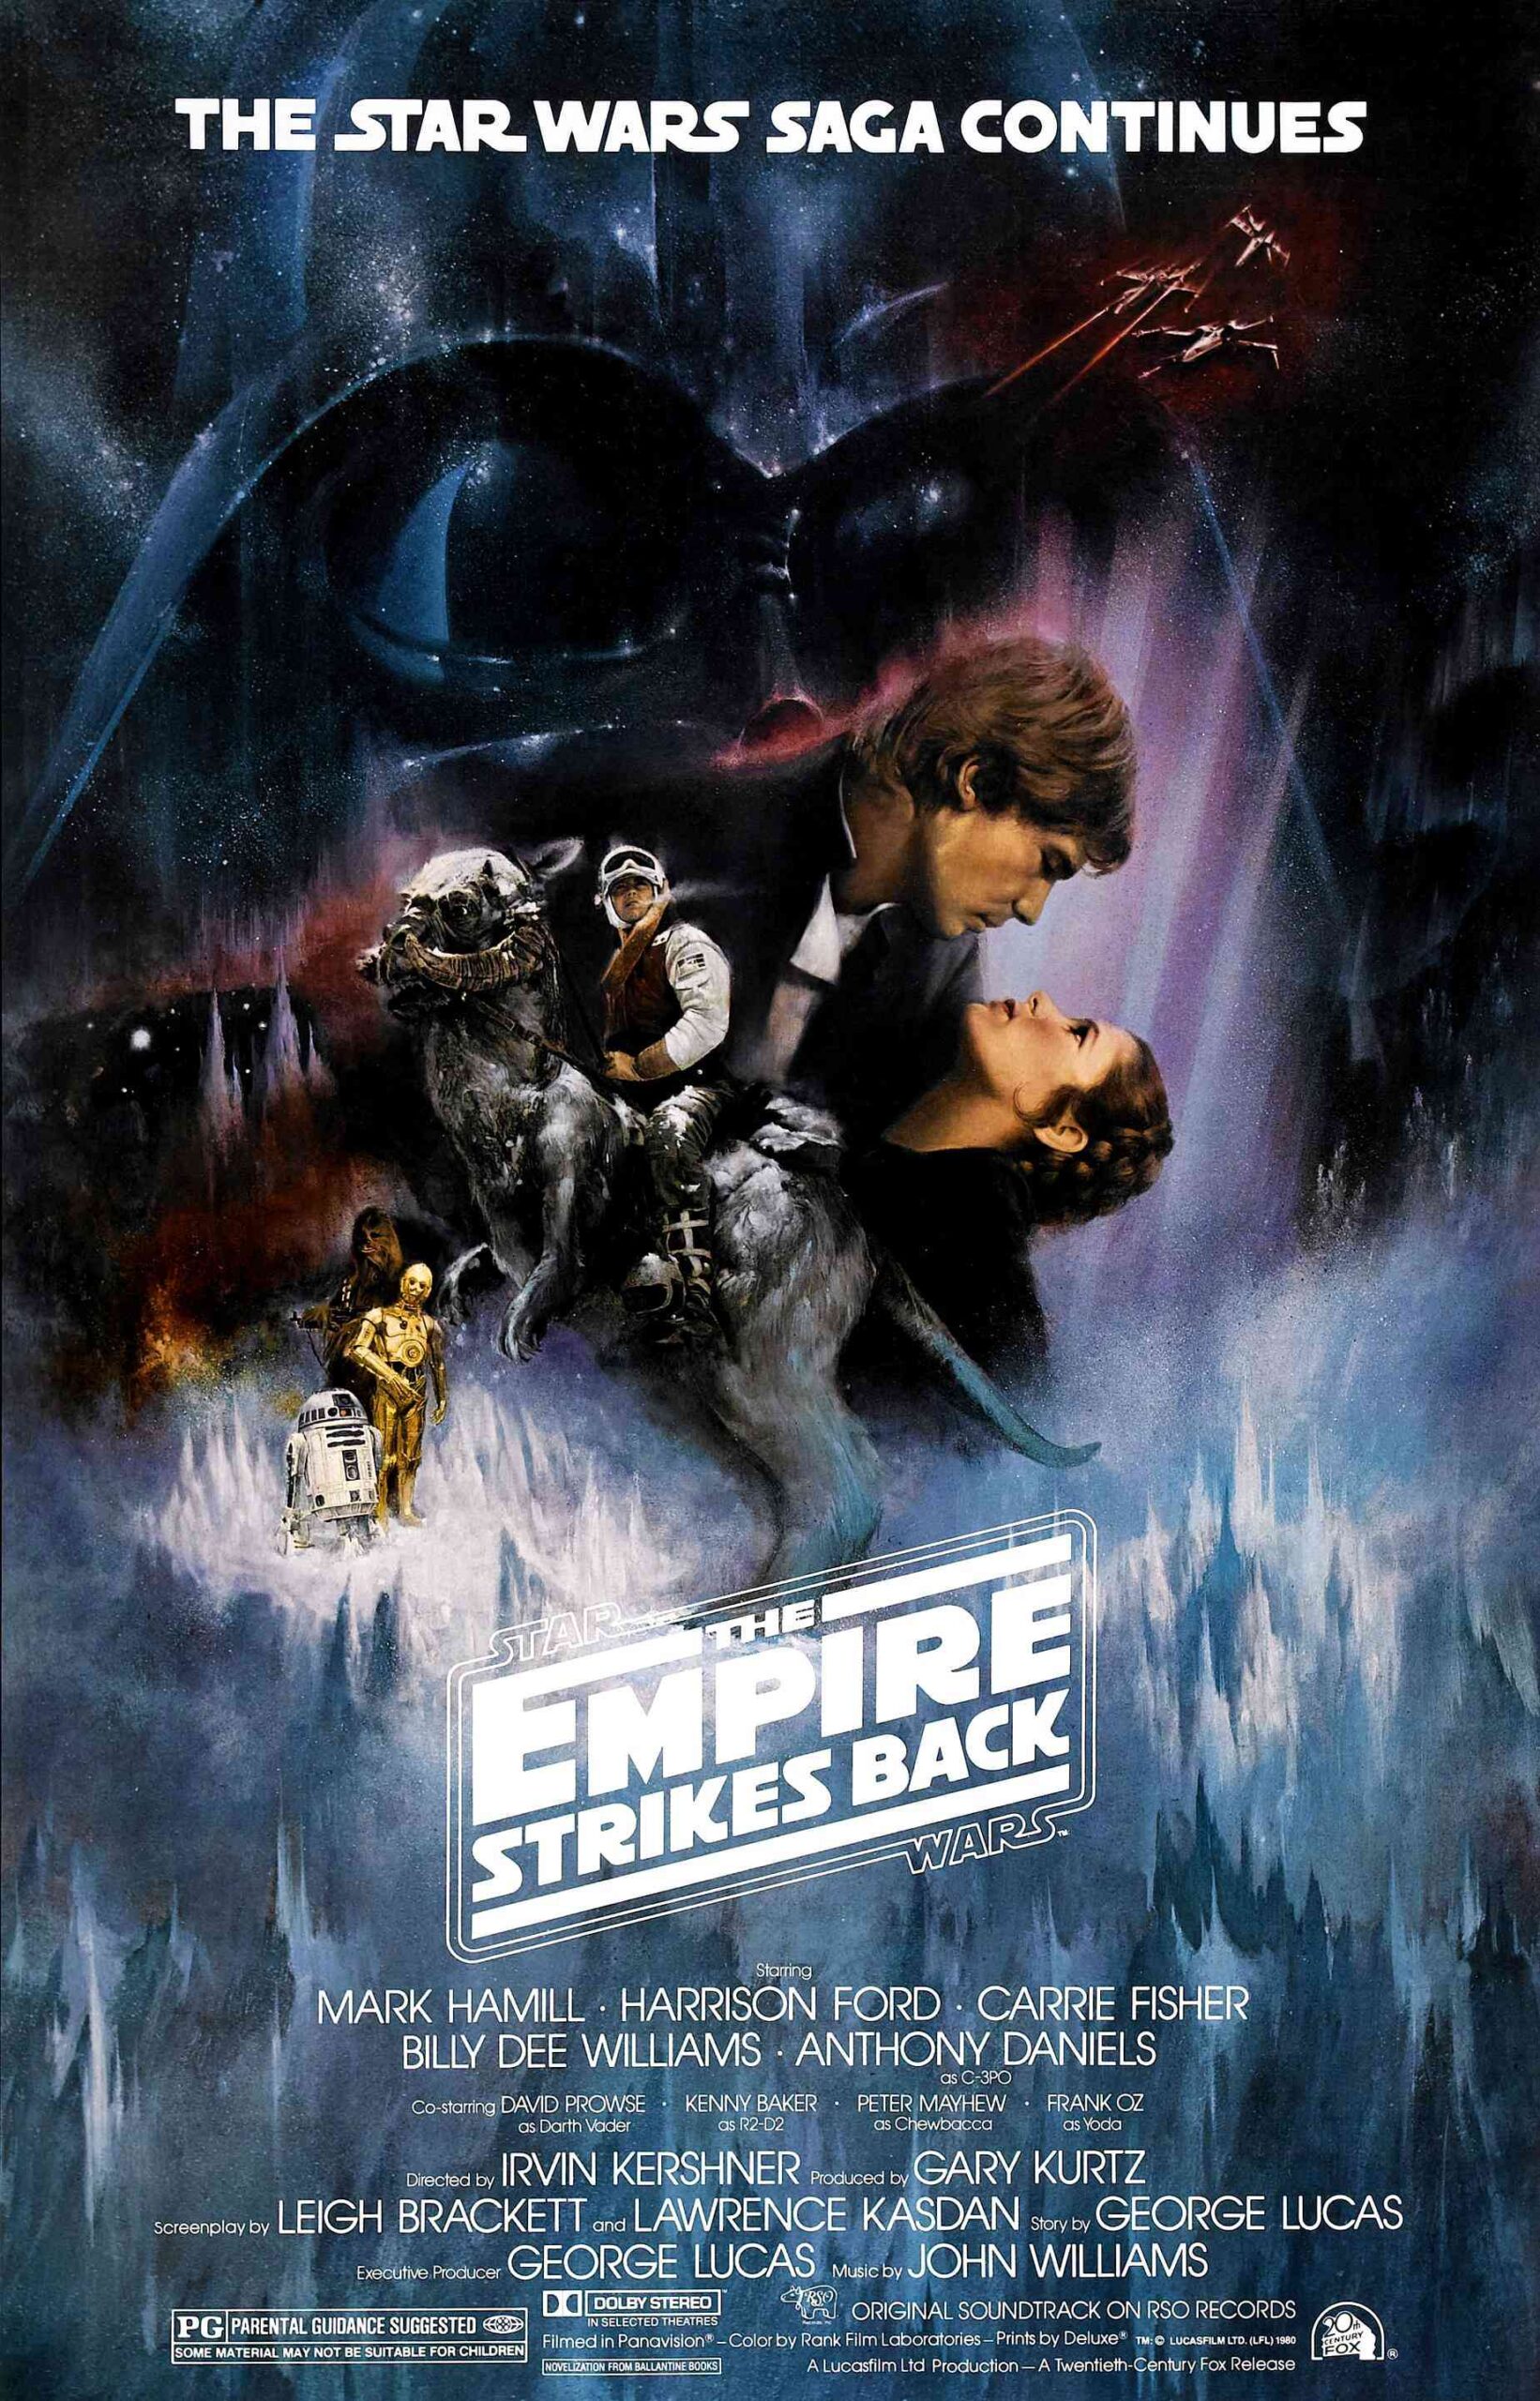 FULL MOVIE: Star Wars: Episode V – The Empire Strikes Back (1980)